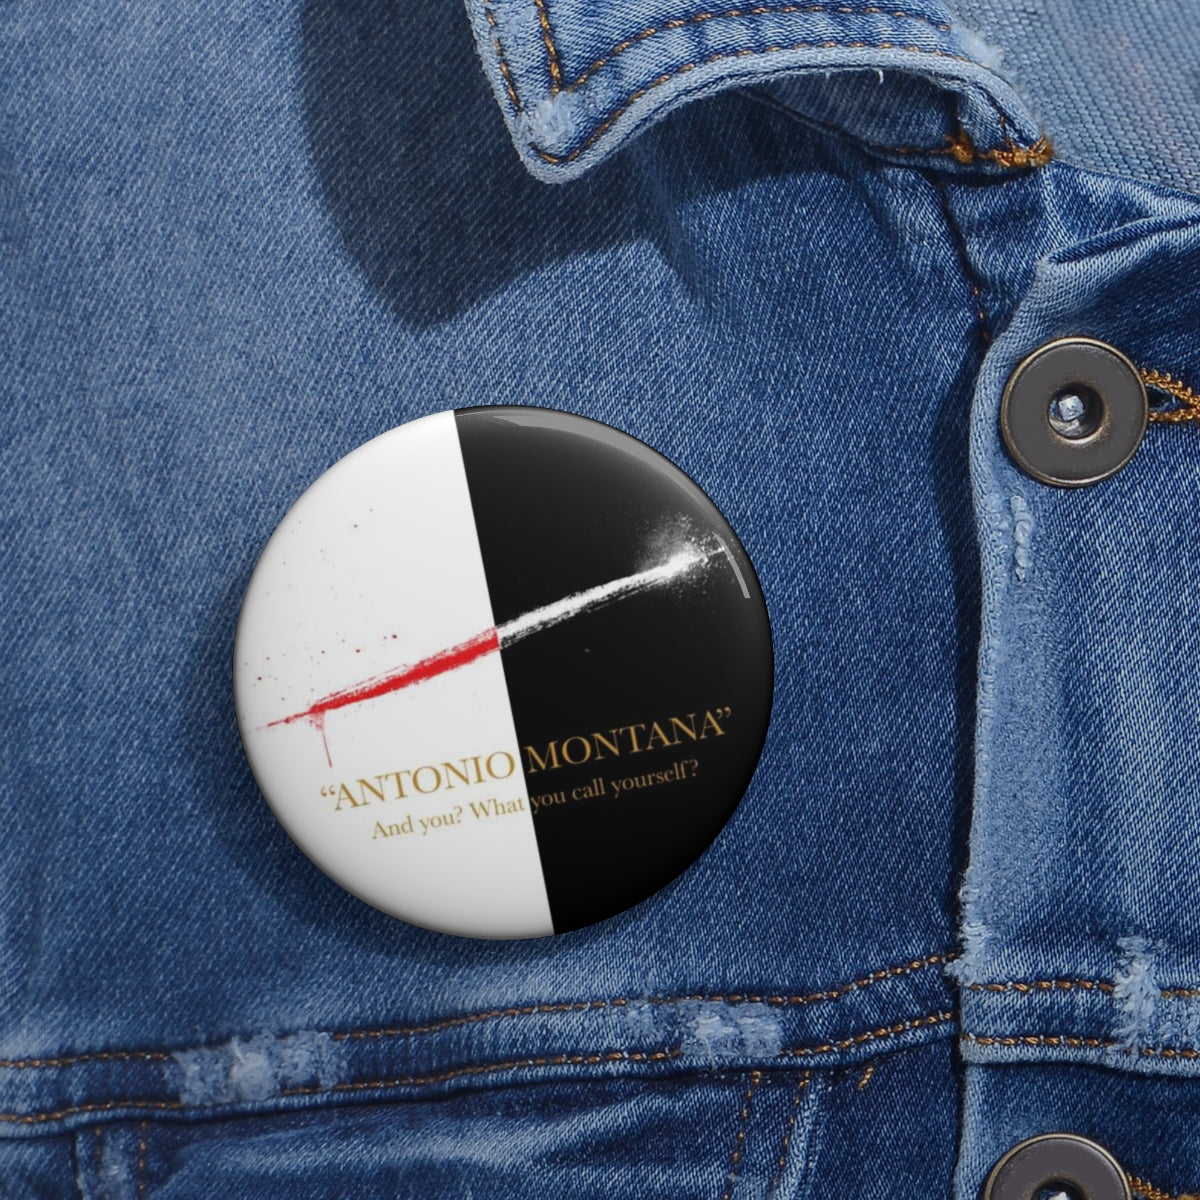 Tony Montana "Scarface" | Pin Button